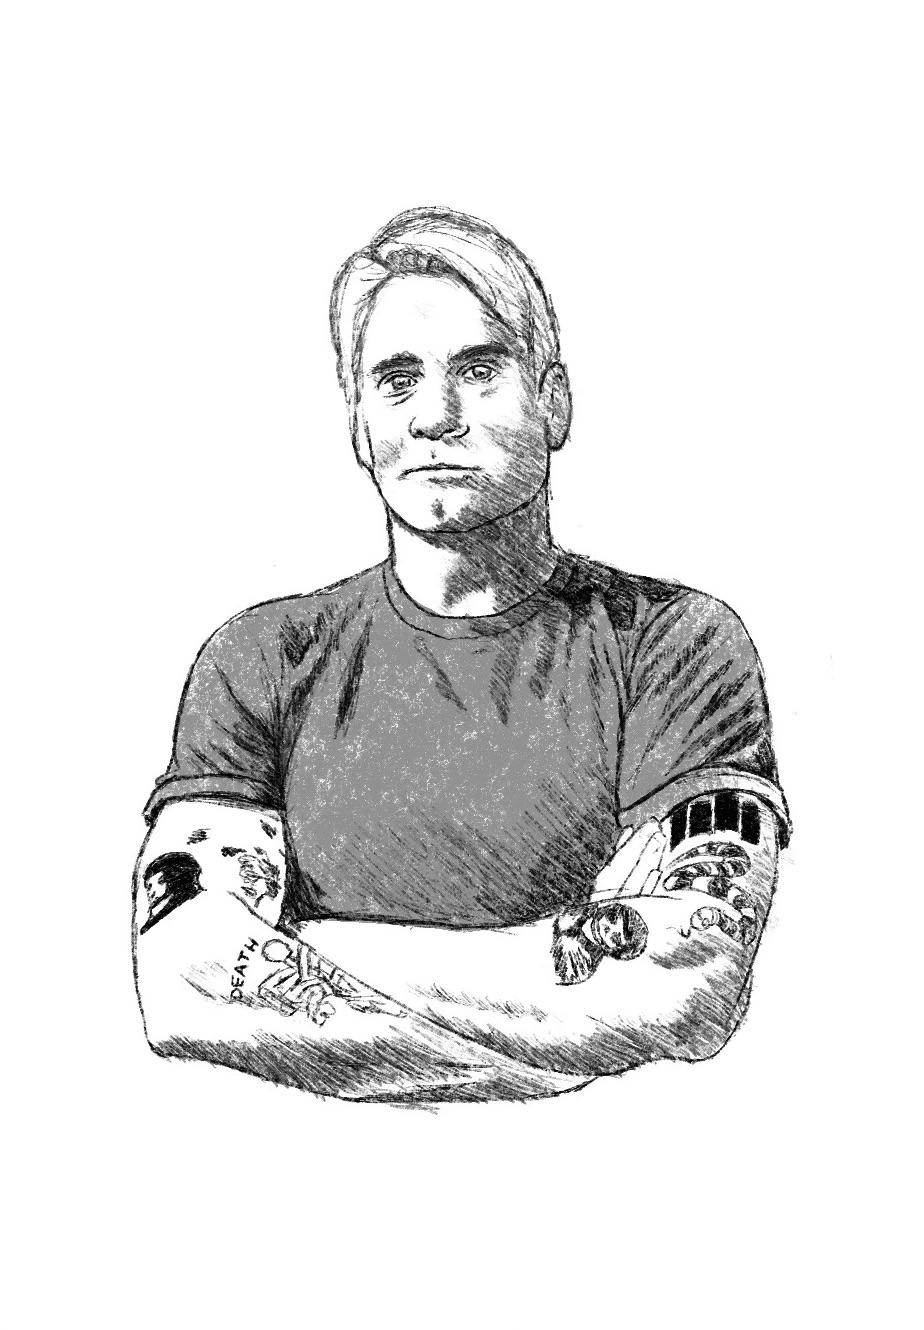 Work in progress sketch of Henry Rollins